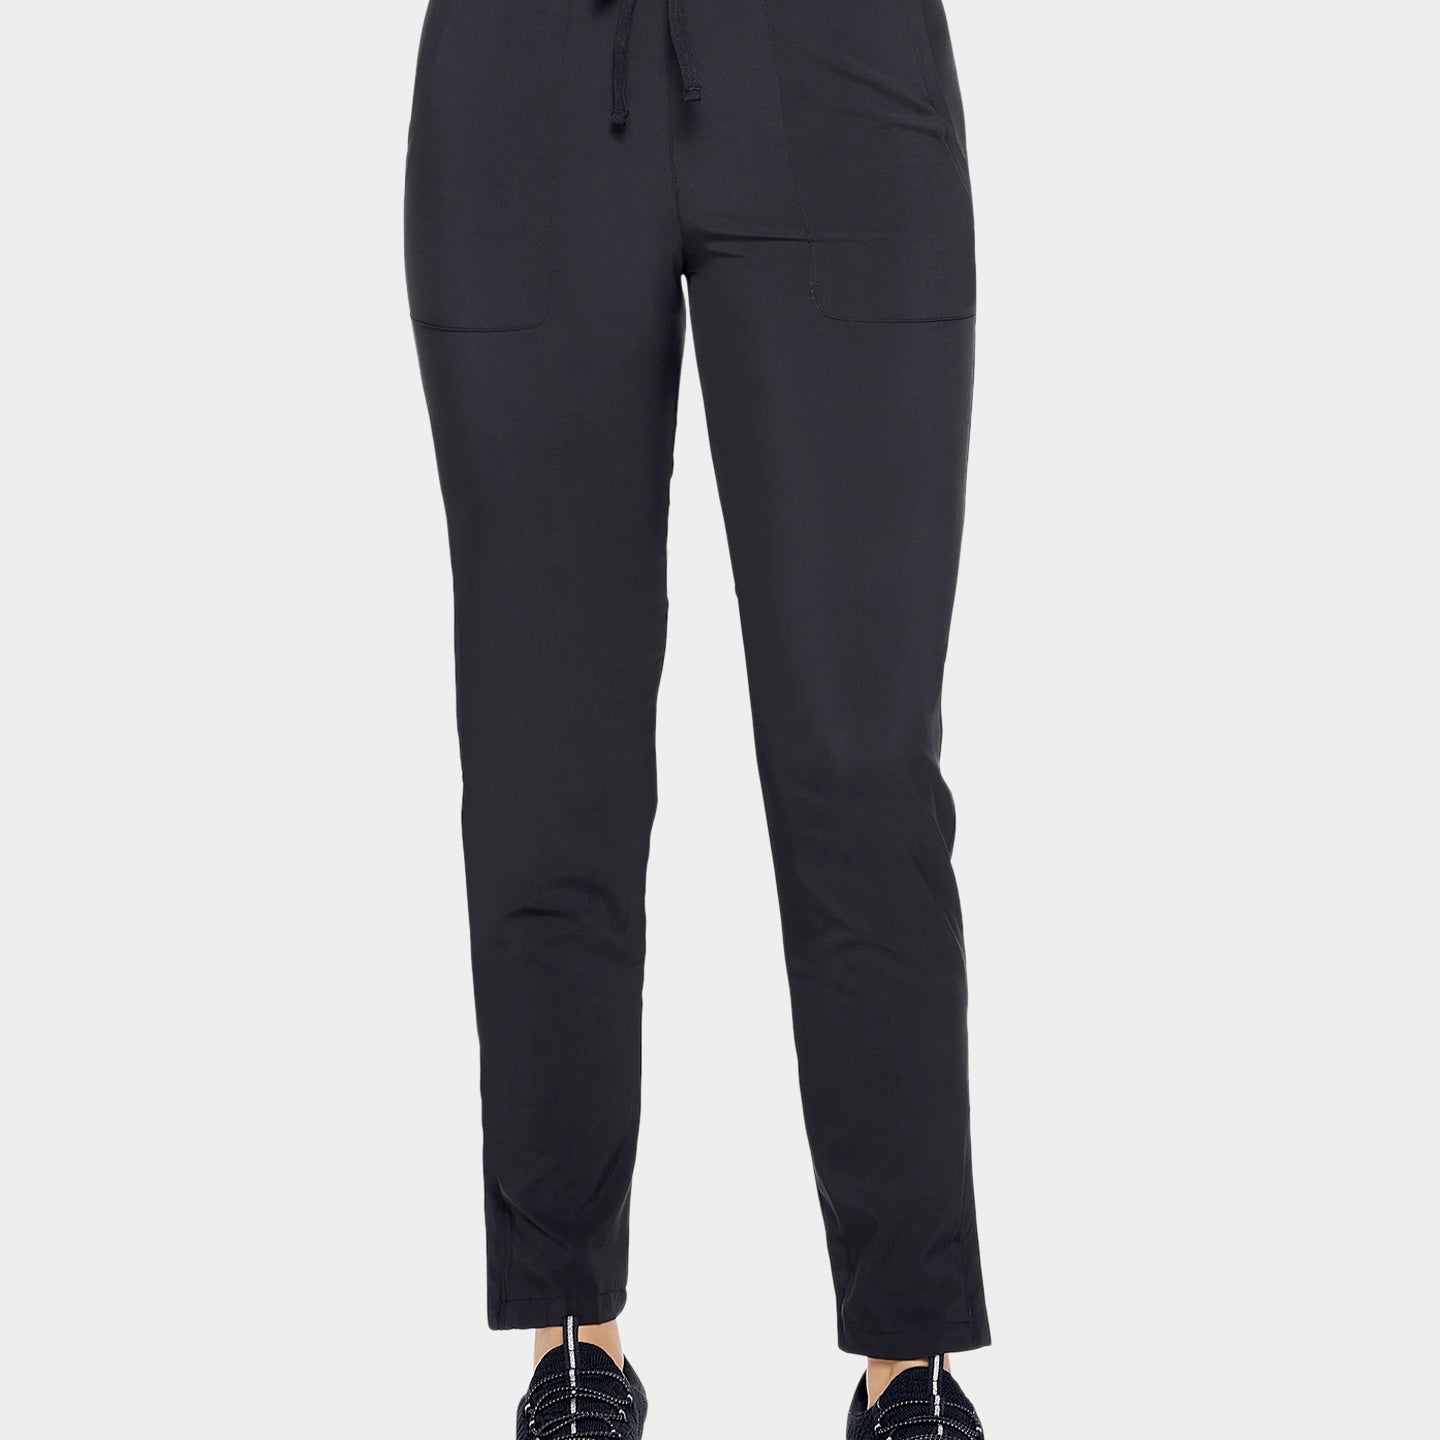 Expert Brand Women's Peformance City Pants, S, Black A2